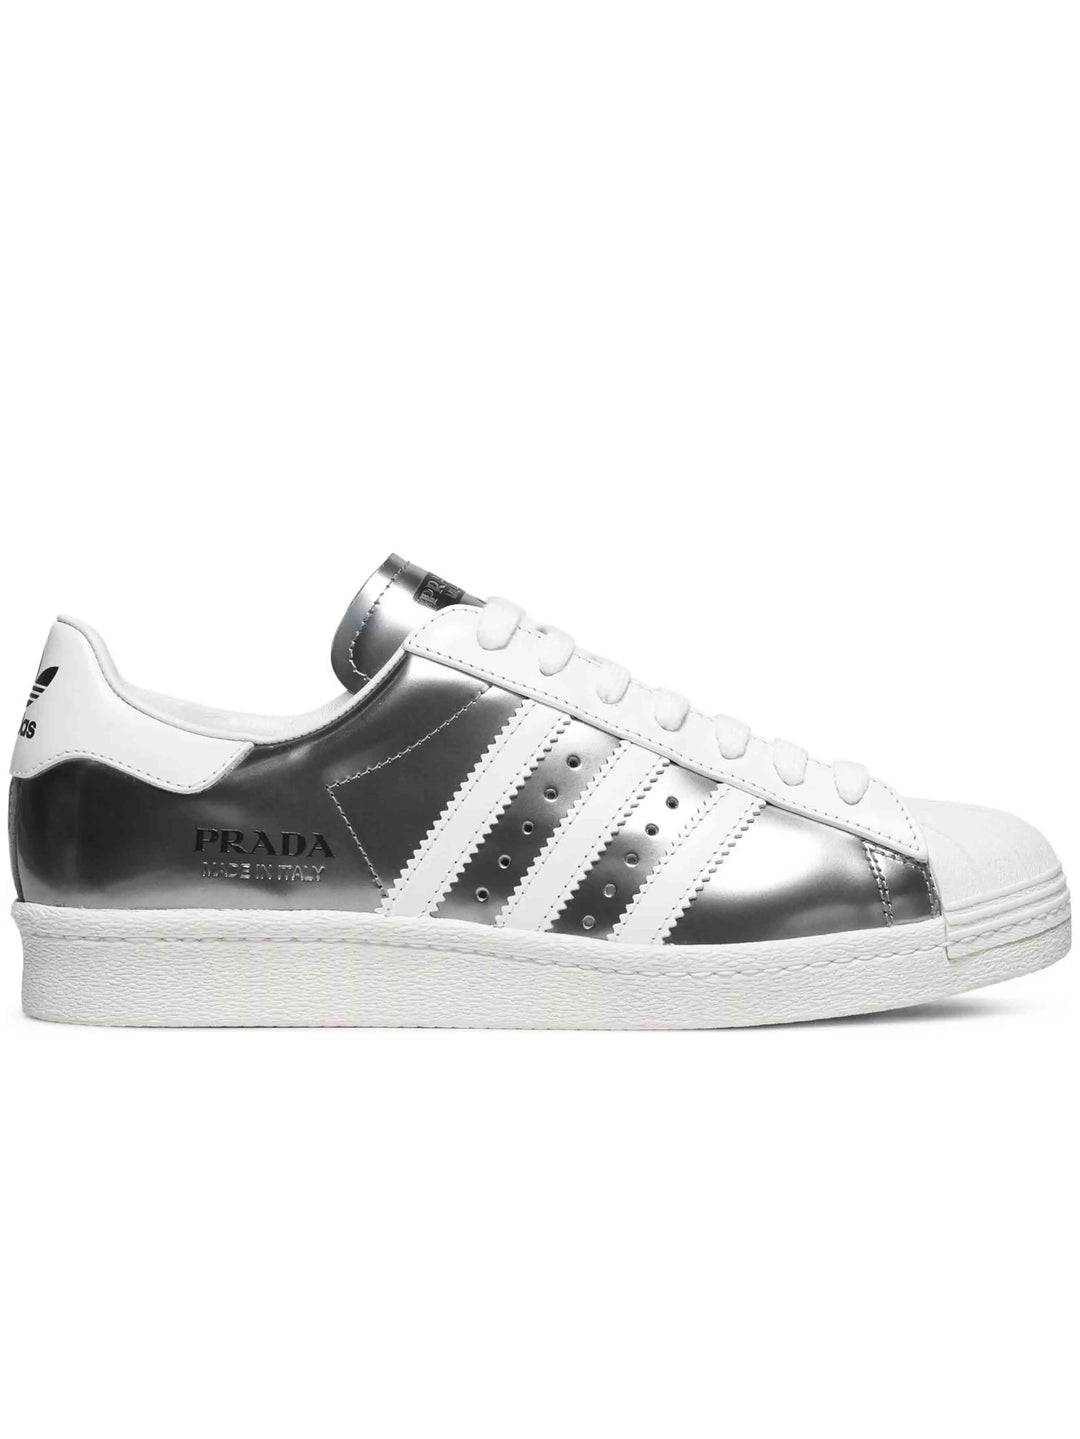 Adidas Superstar Prada Silver Prior